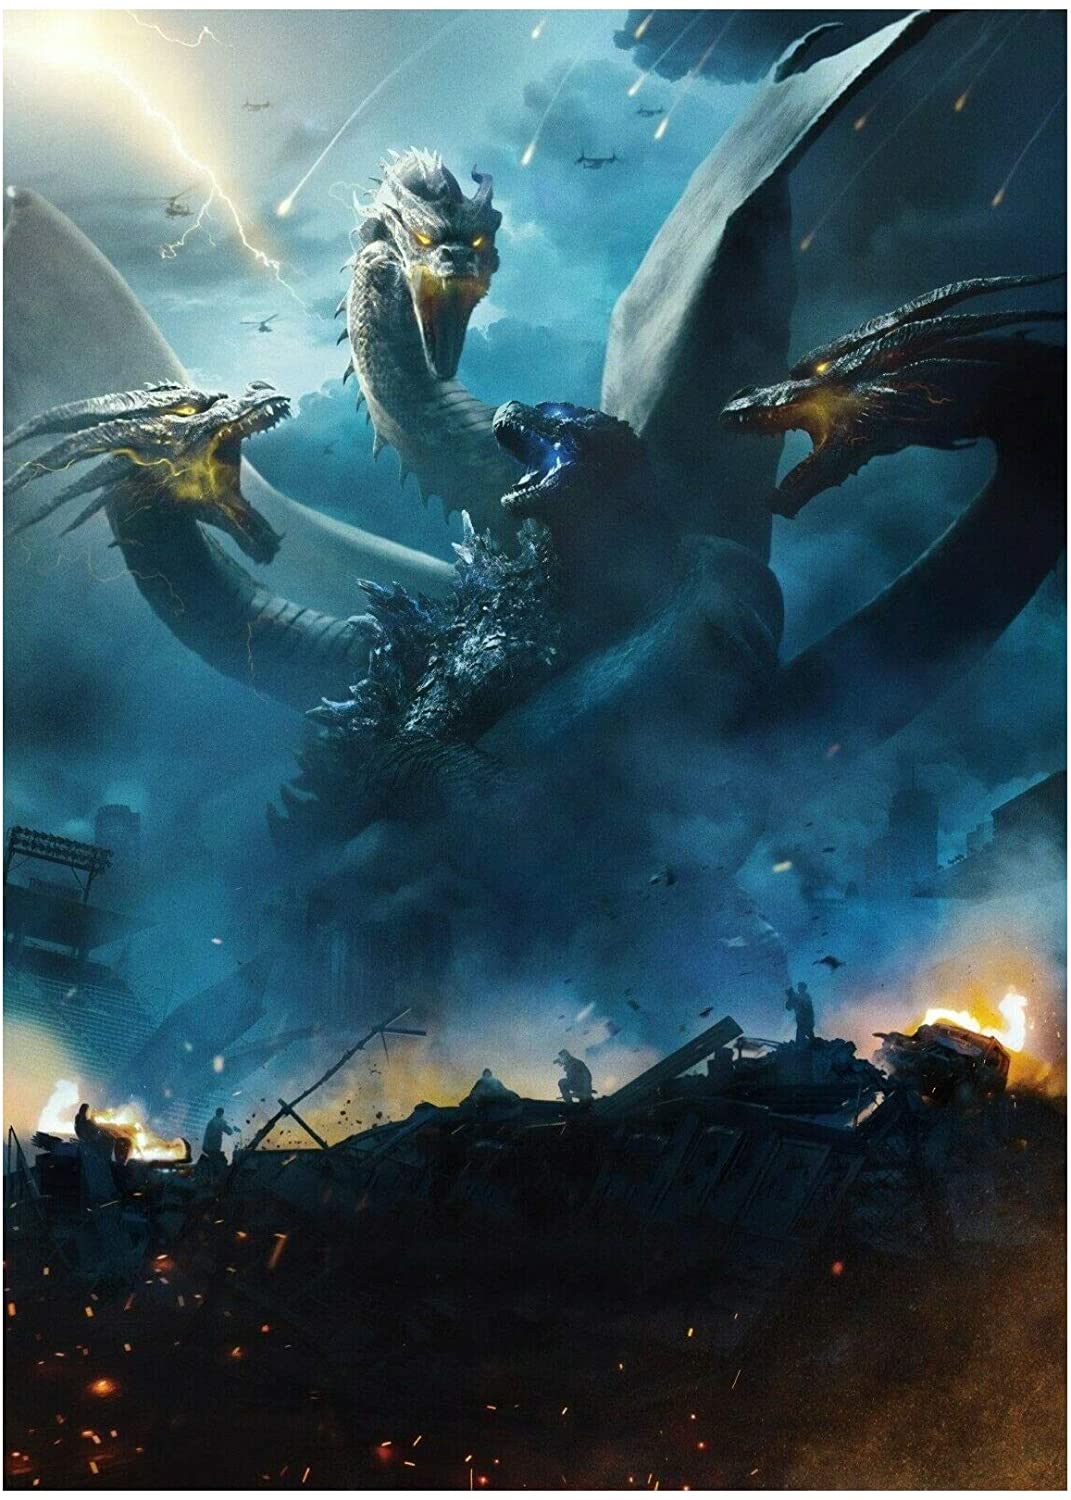 Godzilla King Of The Monsters Minimalist Wallpapers